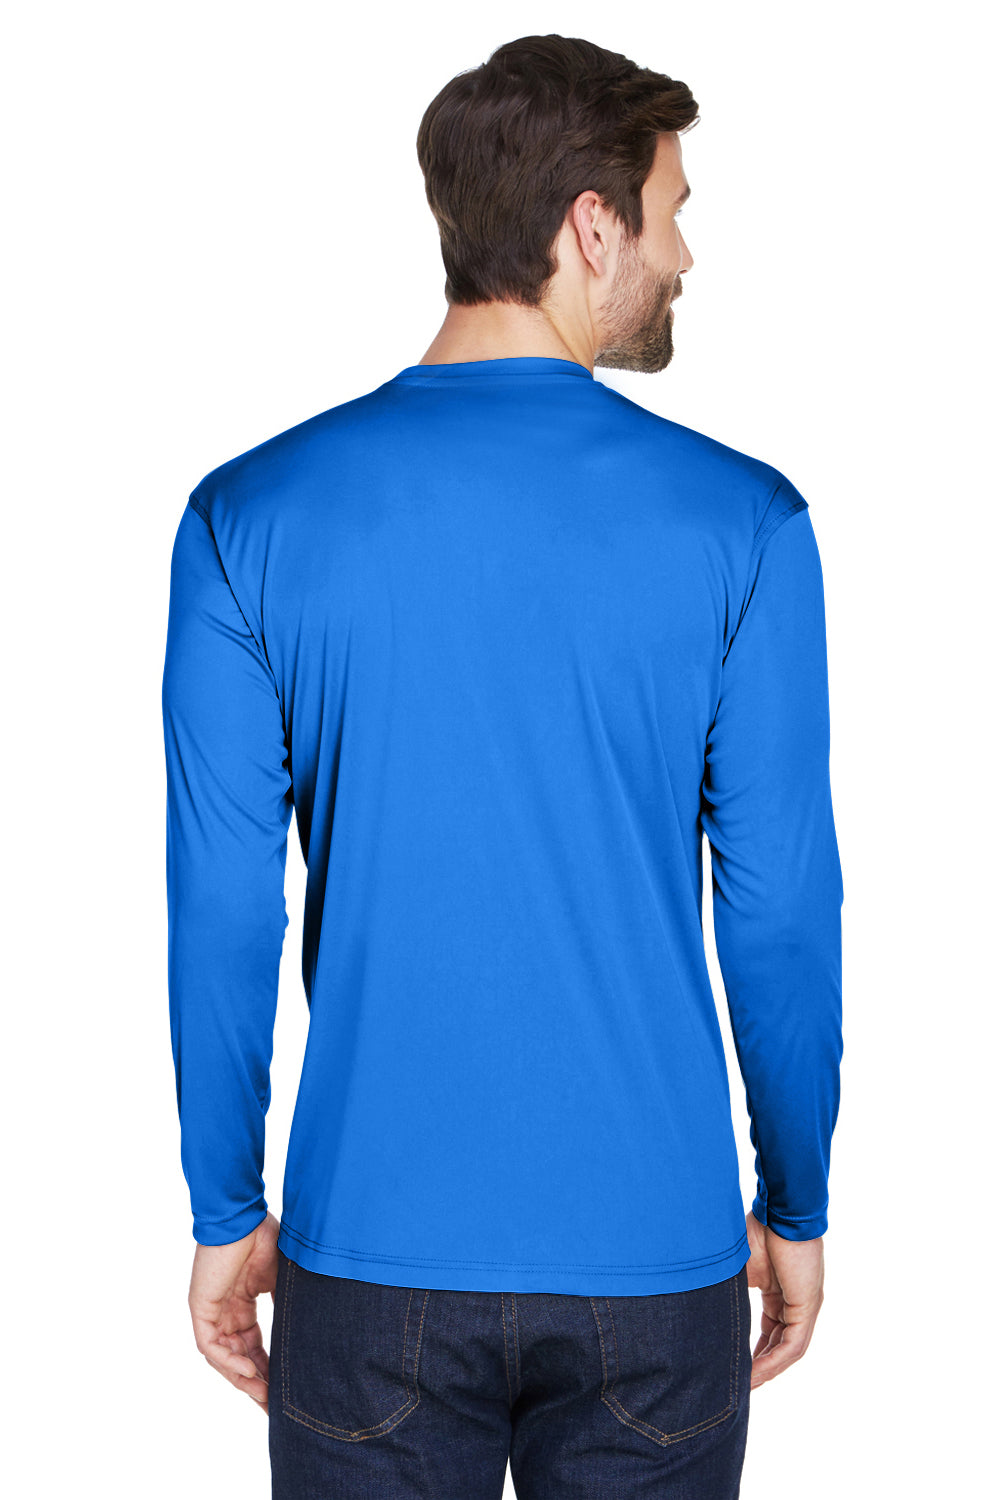 UltraClub 8422 Mens Cool & Dry Performance Moisture Wicking Long Sleeve Crewneck T-Shirt Royal Blue Back